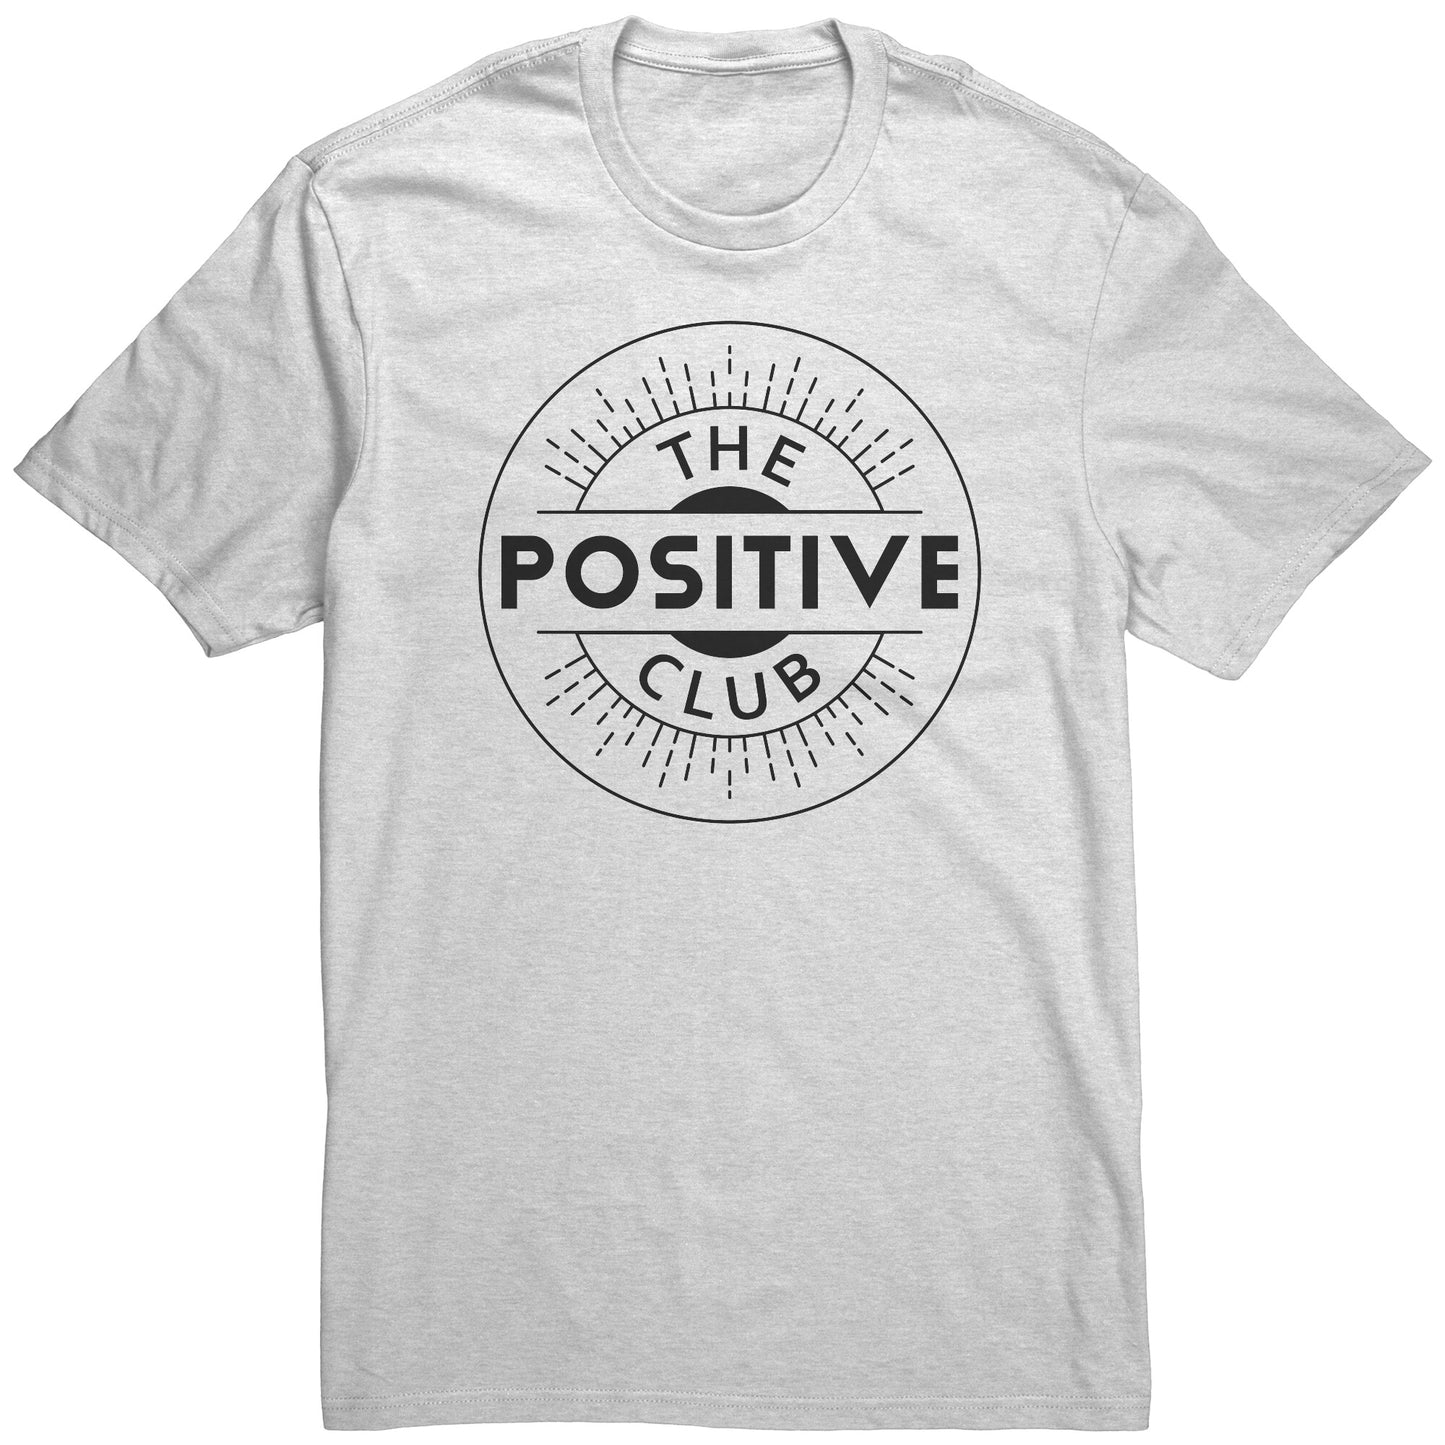 Unisex shirt Black Logo The Positive Club ( Free Shipping )